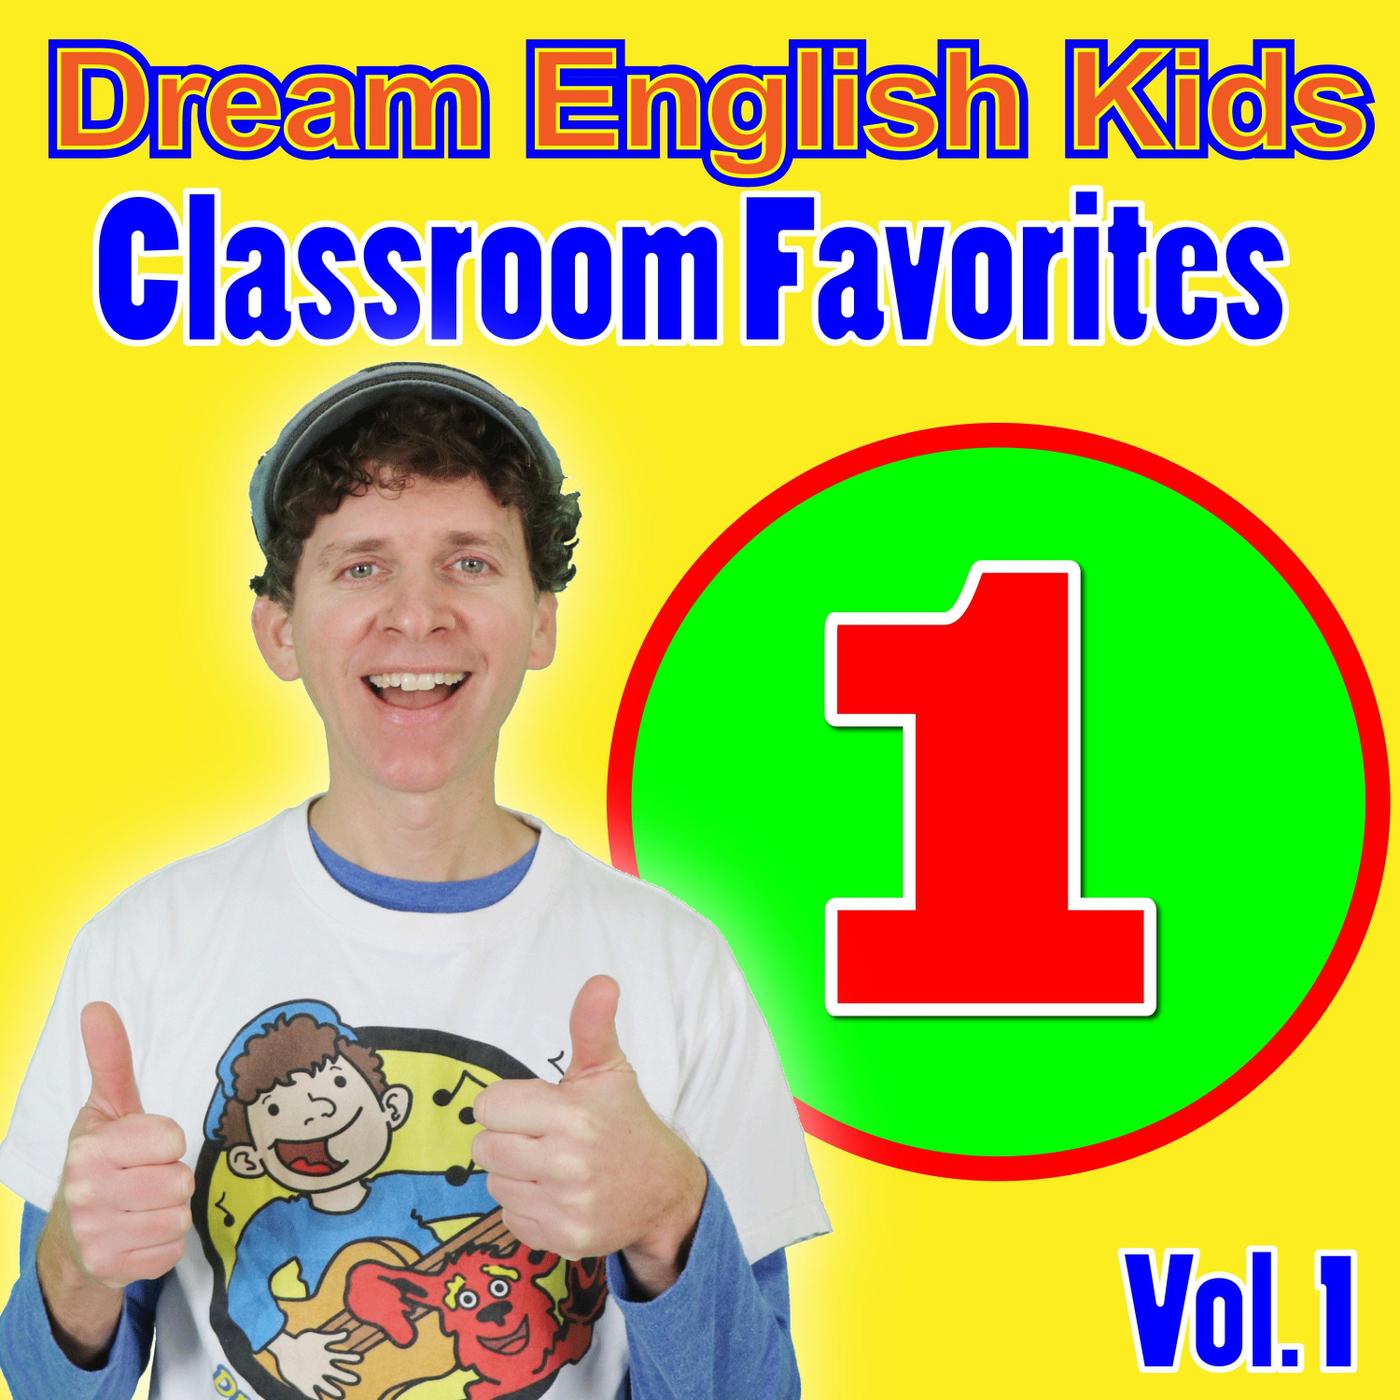 classroom-favorites-vol-1-dream-english-kids